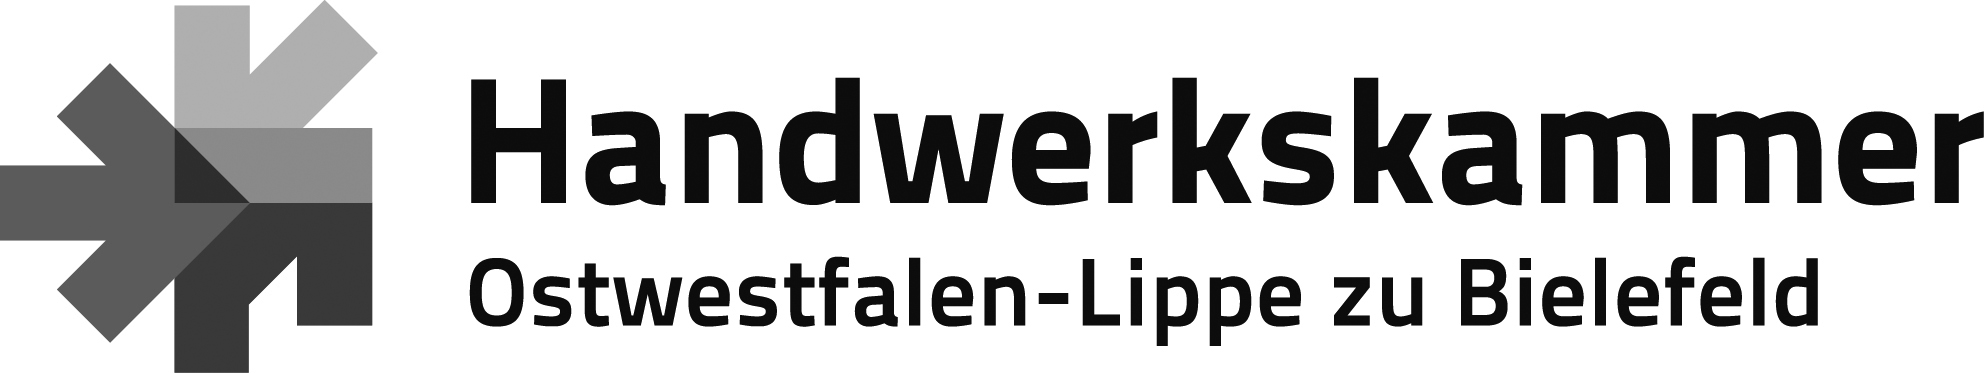 Handwerkskammer Bielefeld - HwK Bielefeld